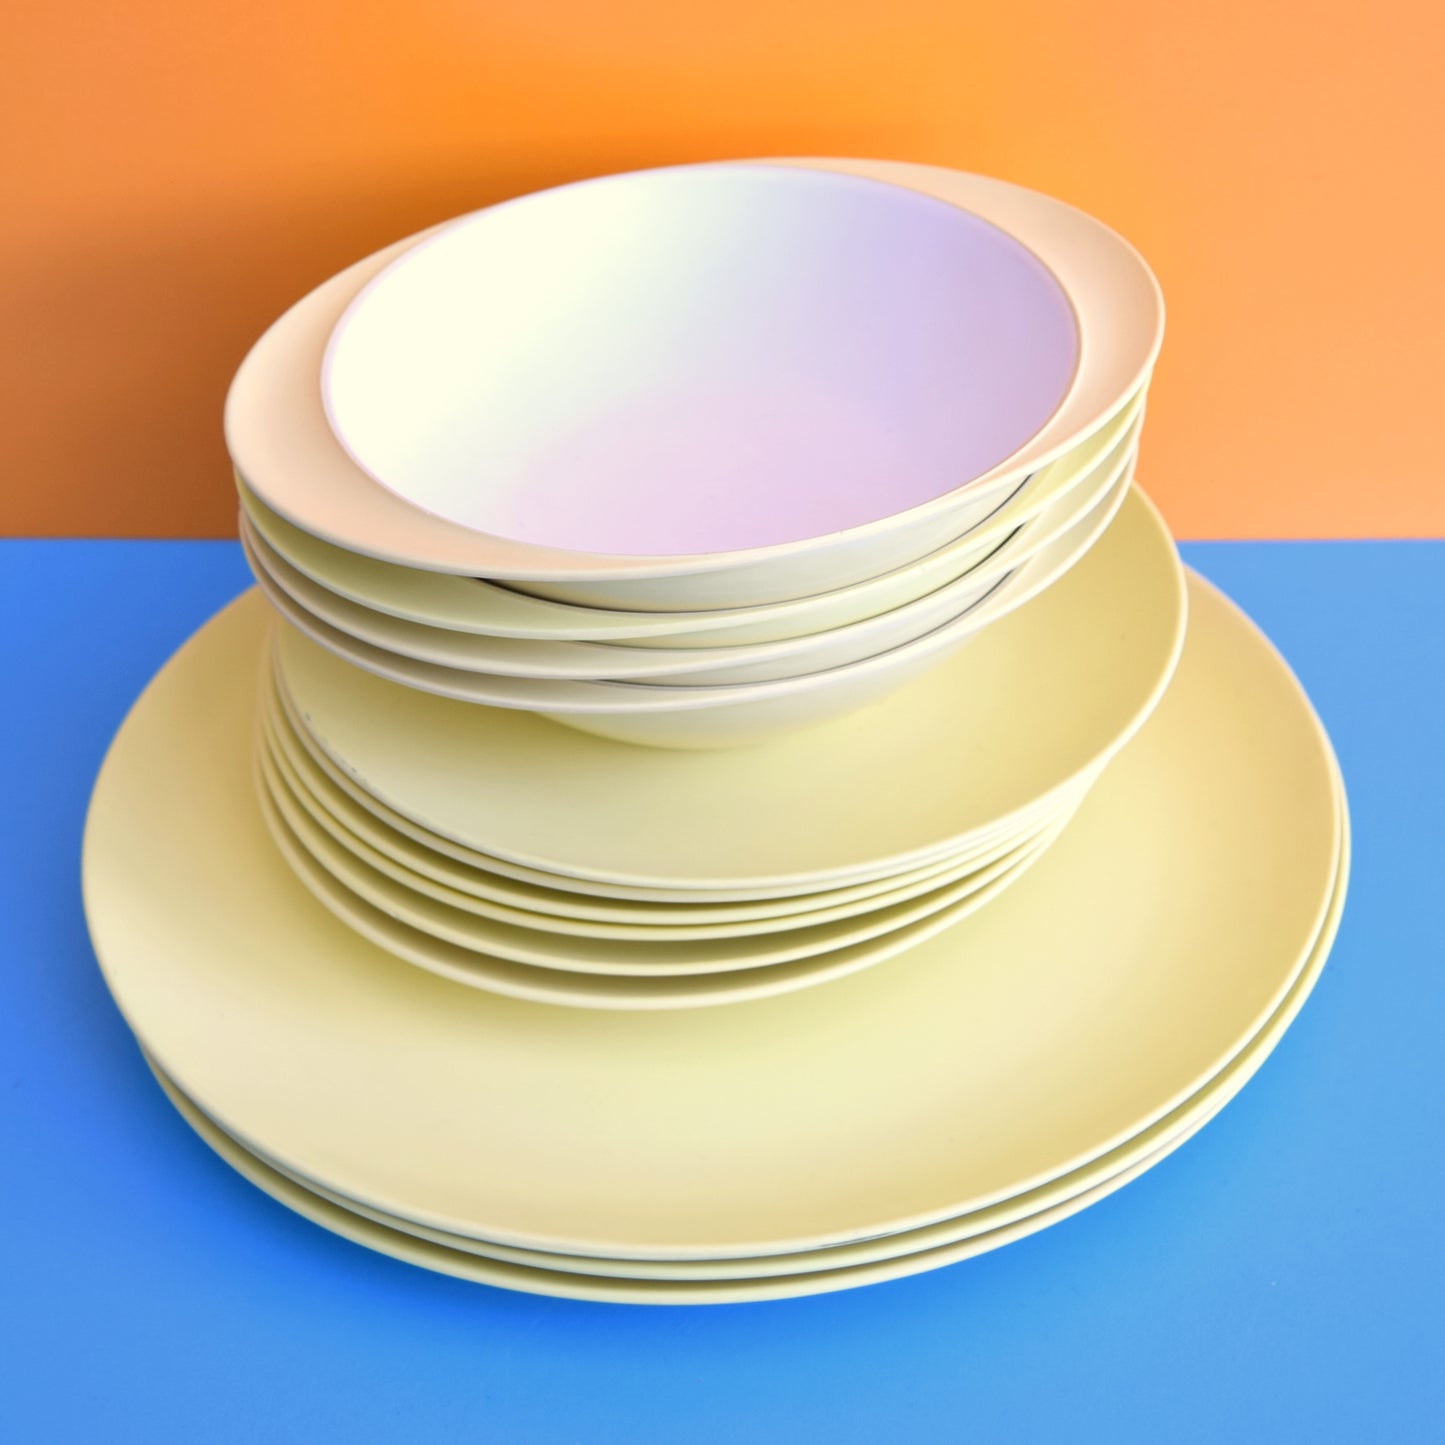 Vintage 1950s Melamine Plastic Plates / Bowls - Lemon Yellow